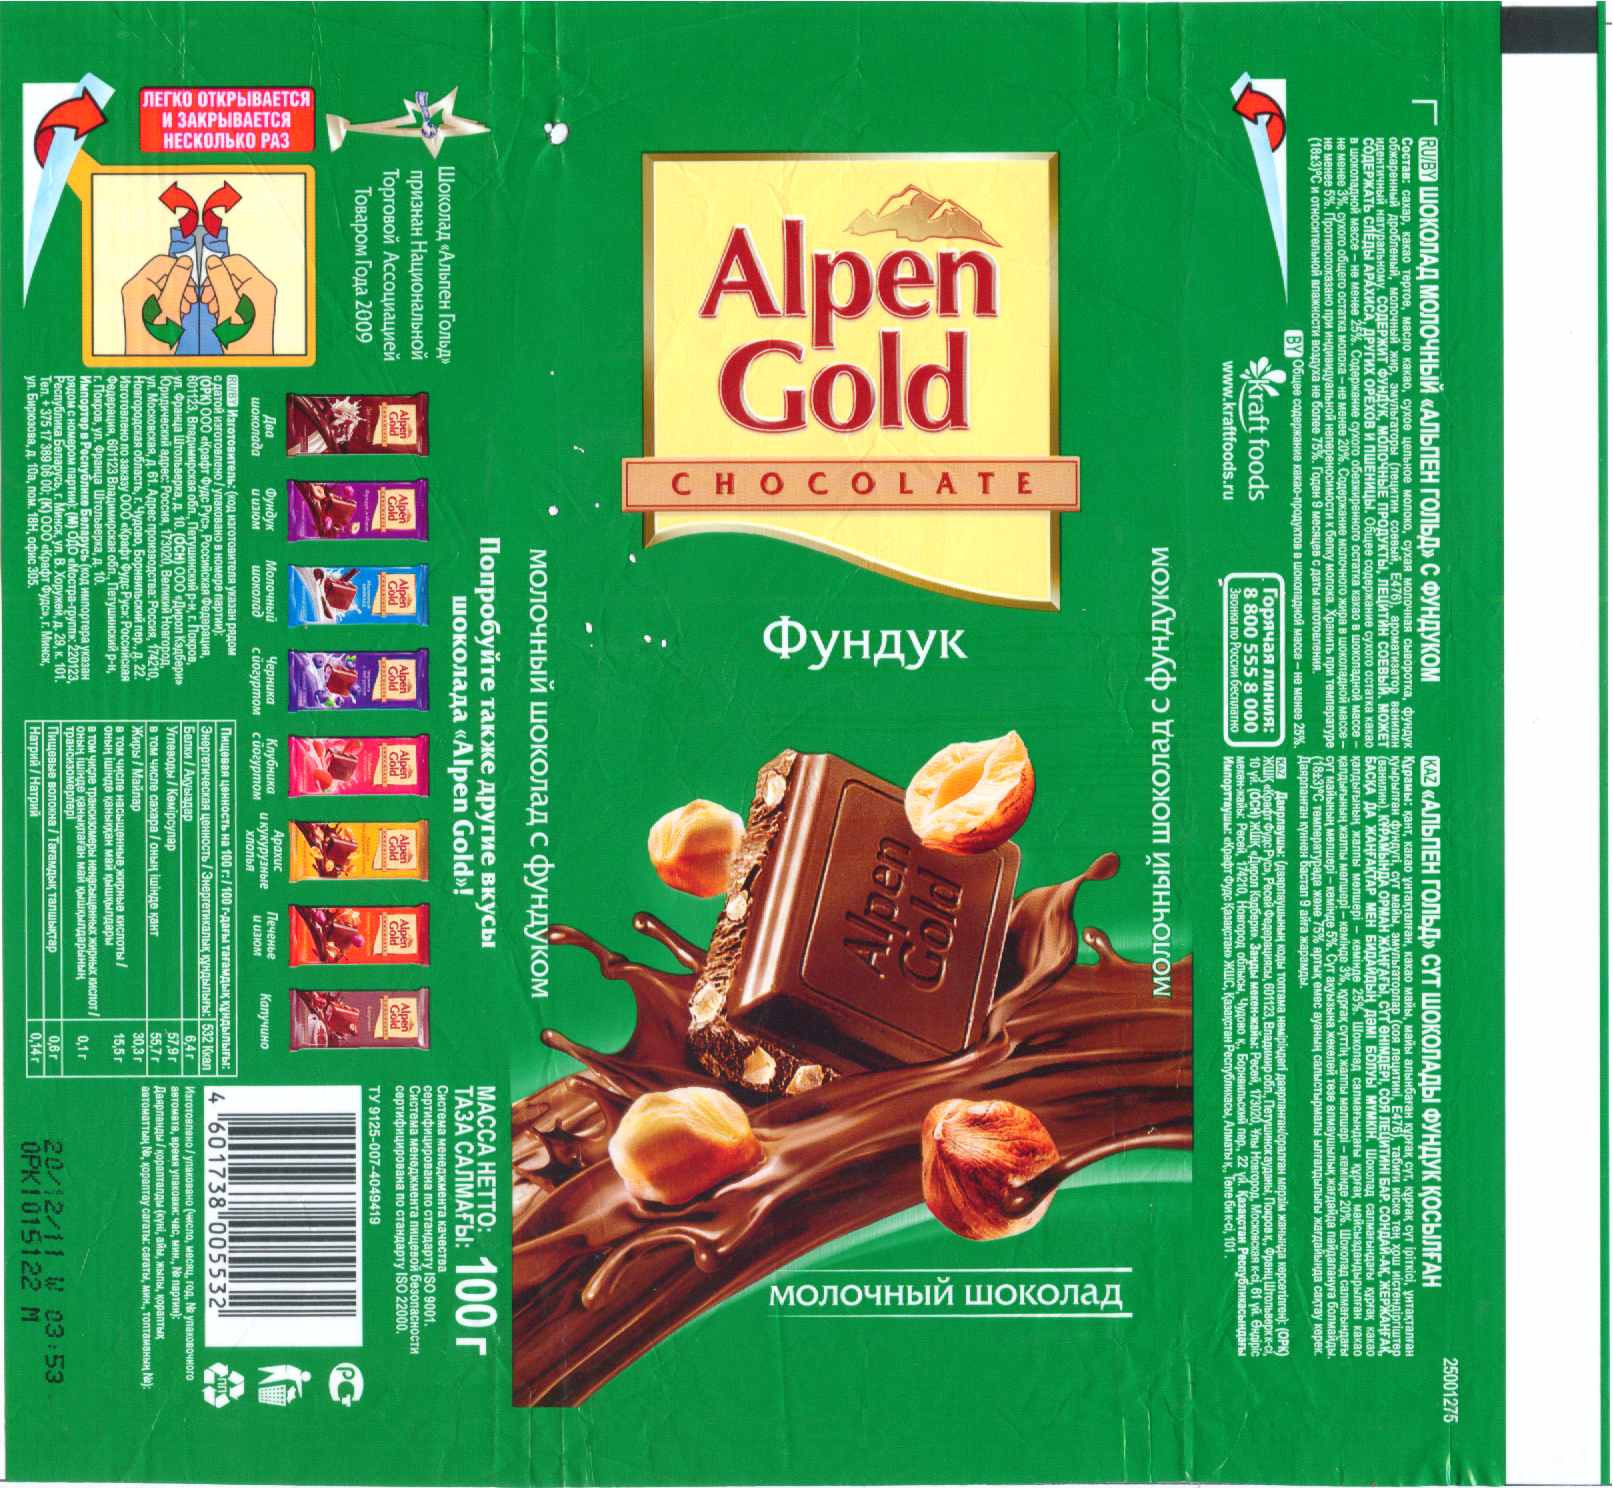 Плитка шоколада масса. Шоколад Альпен Гольд. Обертка шоколадки Альпен Гольд. Шоколад Альпен Альпен Гольд вес. Шоколад Альпен Гольд 2010-2015.